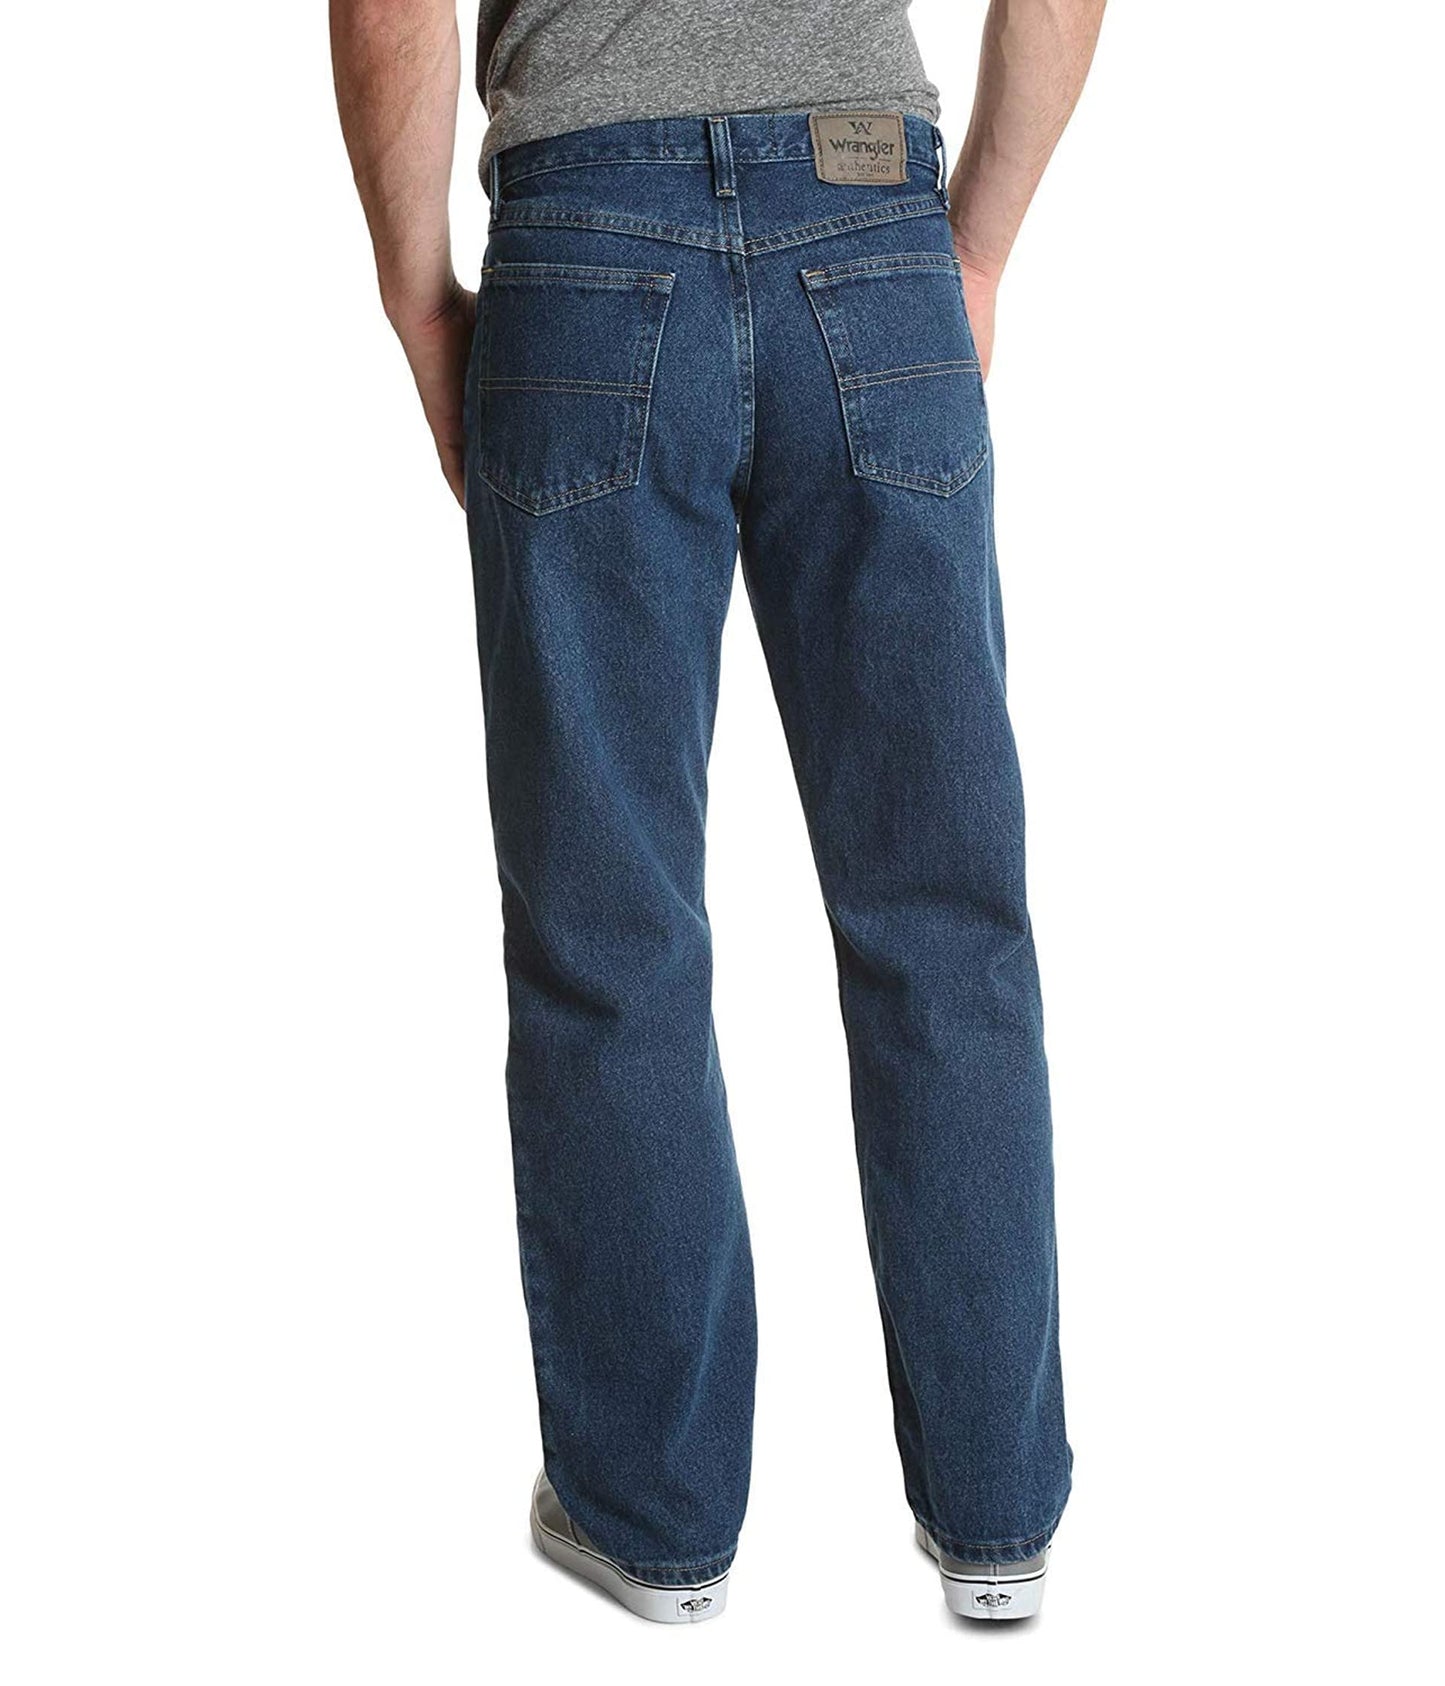 Wrangler Authentics Men's Classic 5-Pocket Relaxed Fit Cotton Jean, Dark Stonewash, 34W X 28L